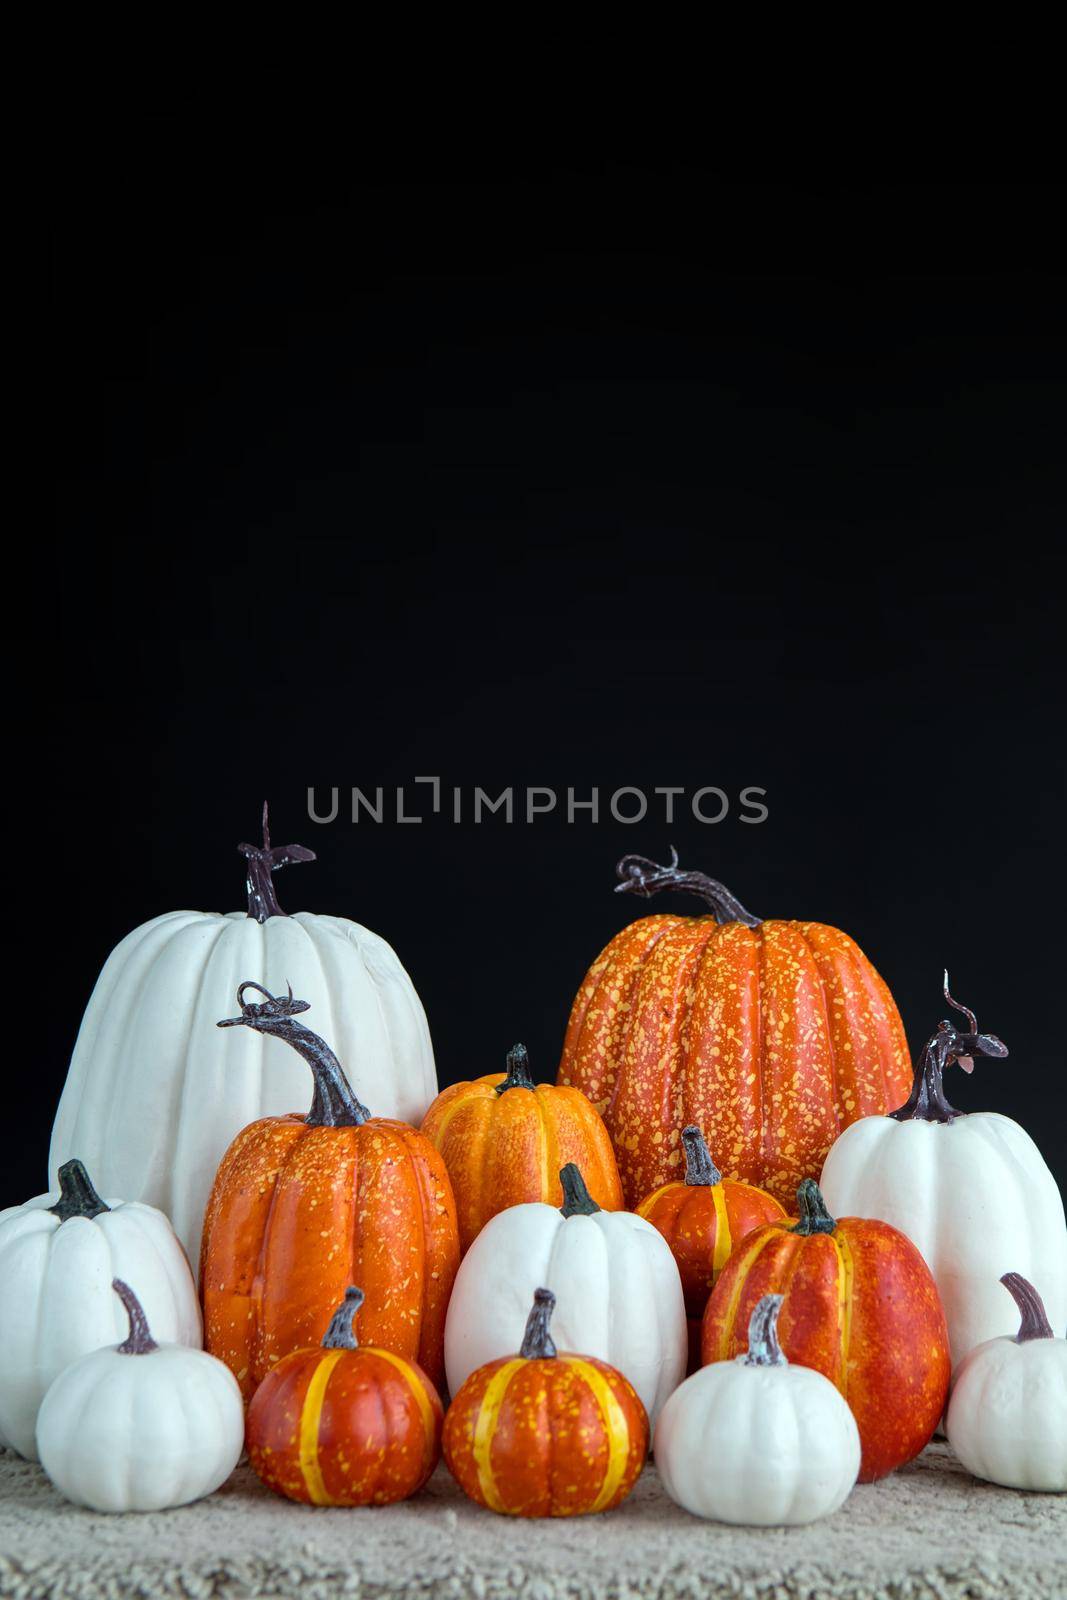 Pumpkins orange and white lie on a black background by Demkat